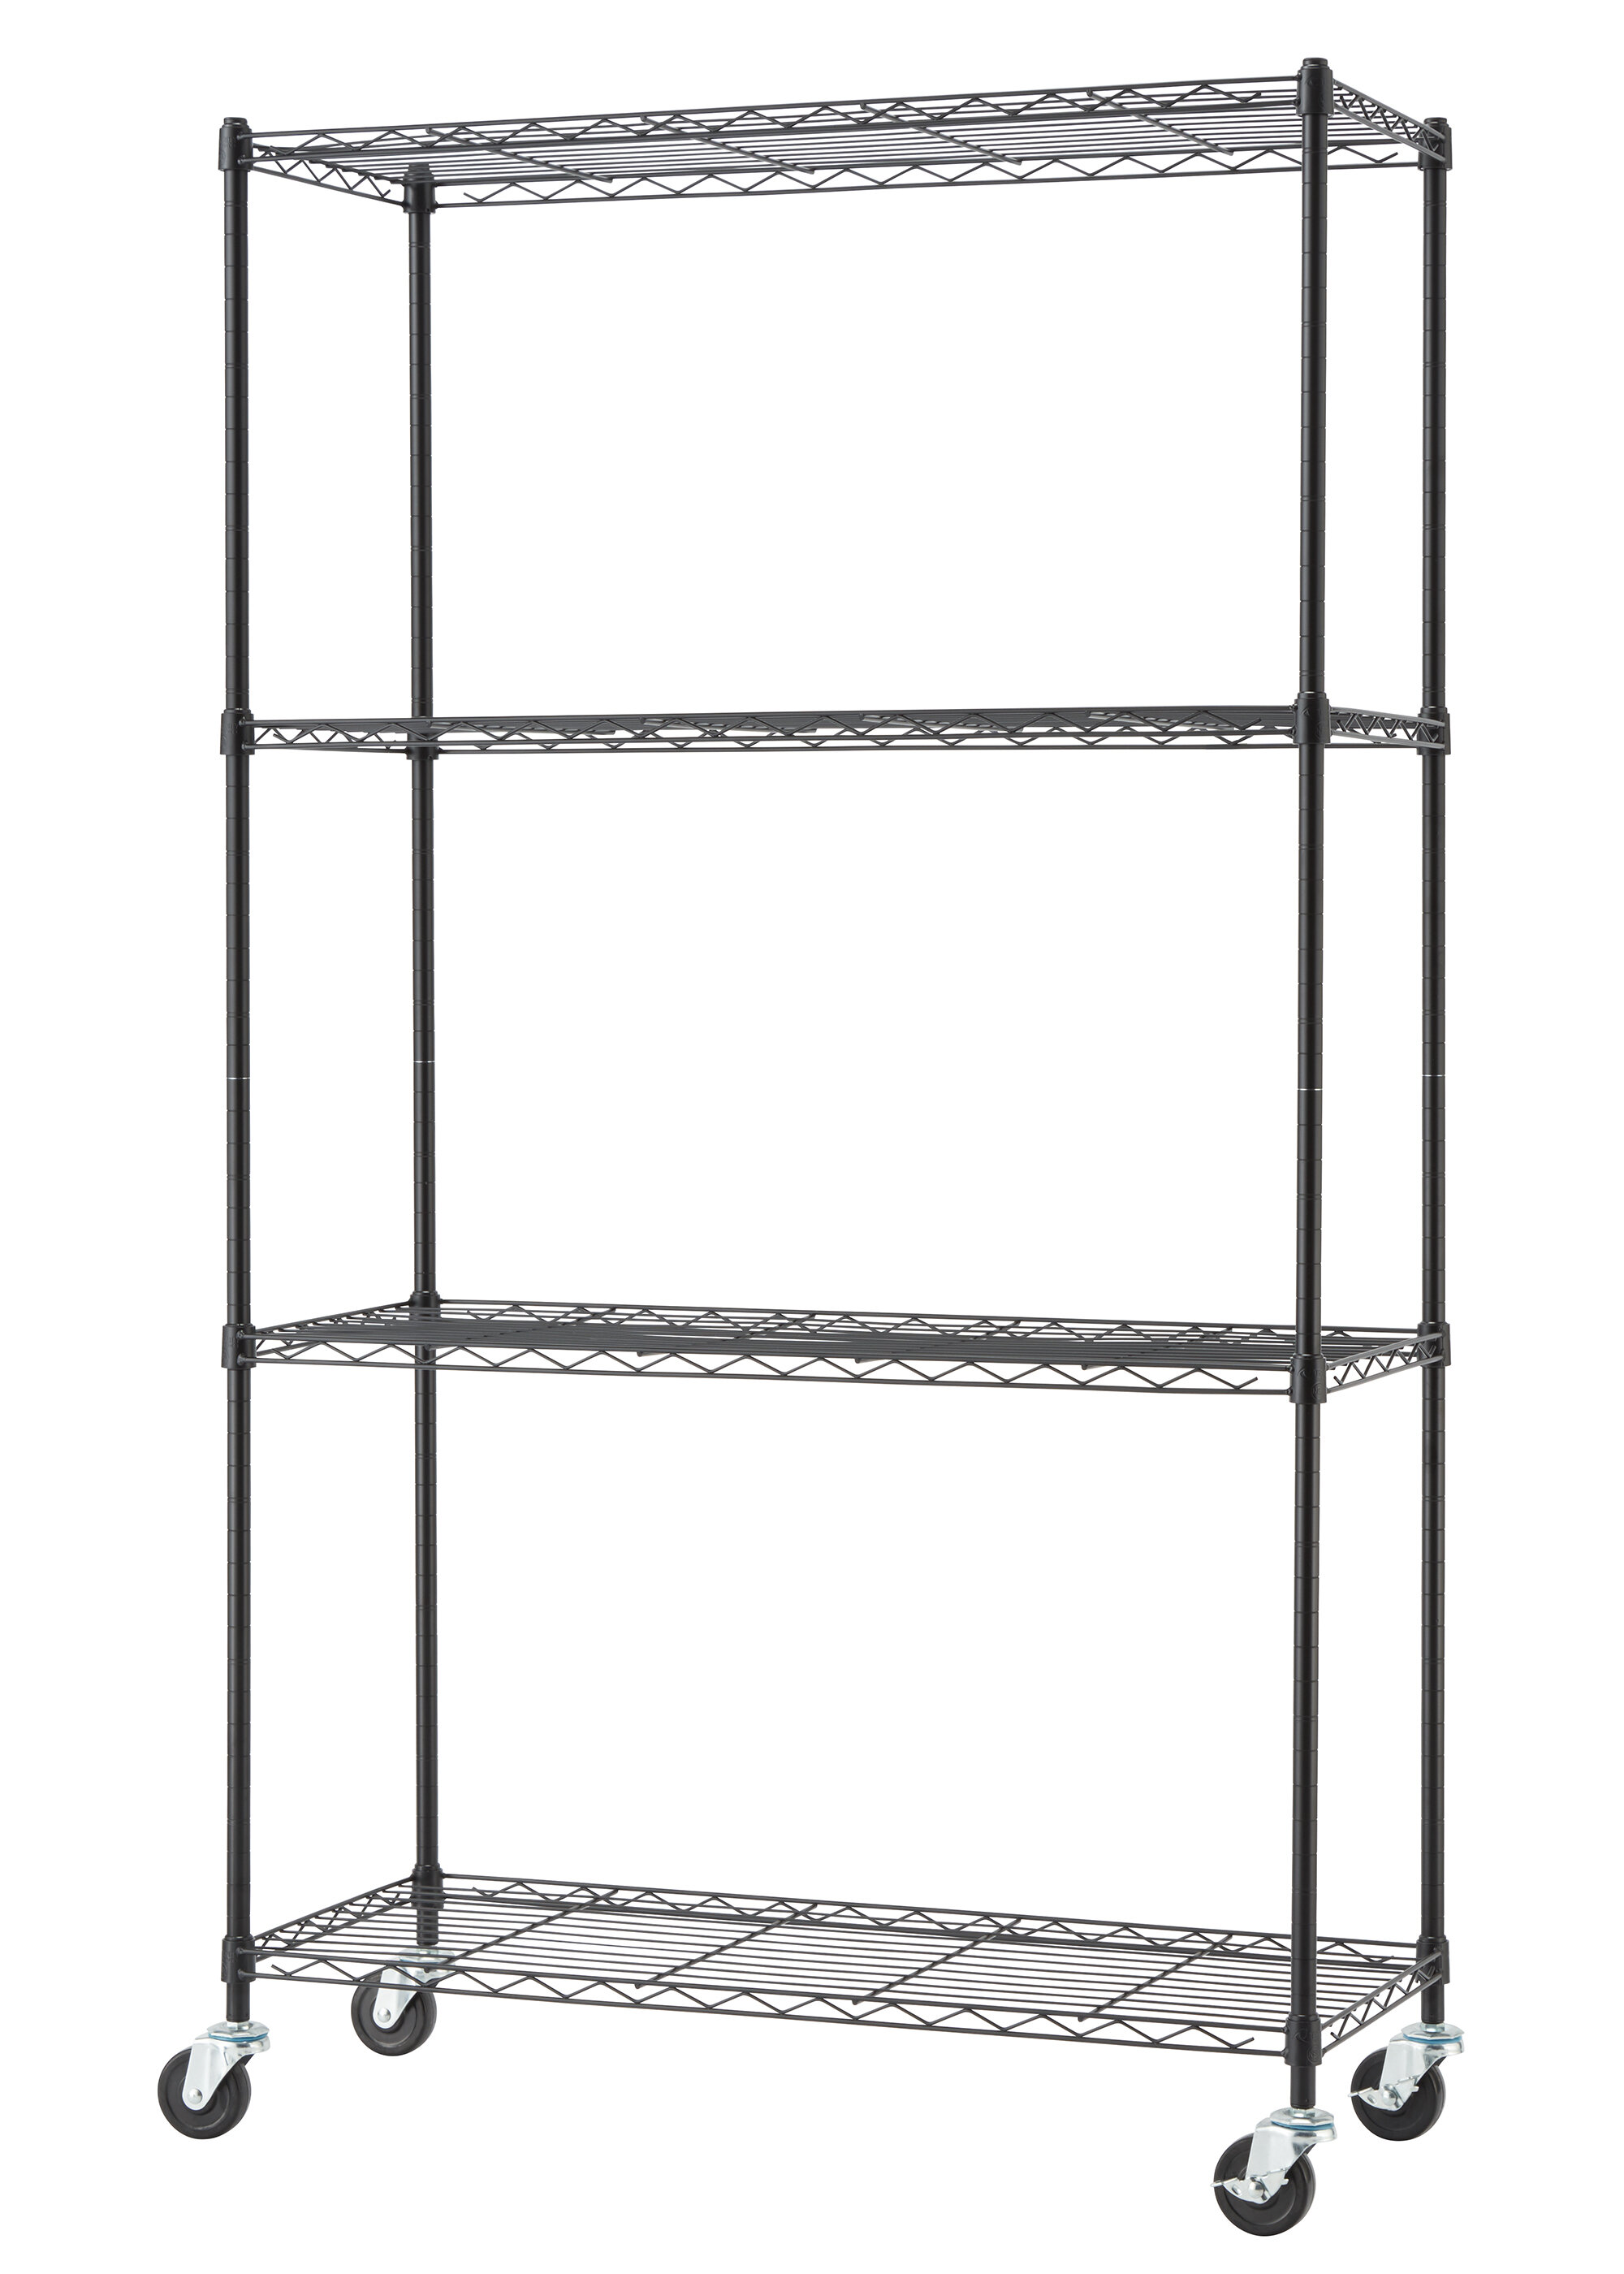 Details about   Heavy Duty Garage Shelf Steel Metal Storage 4 Level Adjustable Shelves MS 200 